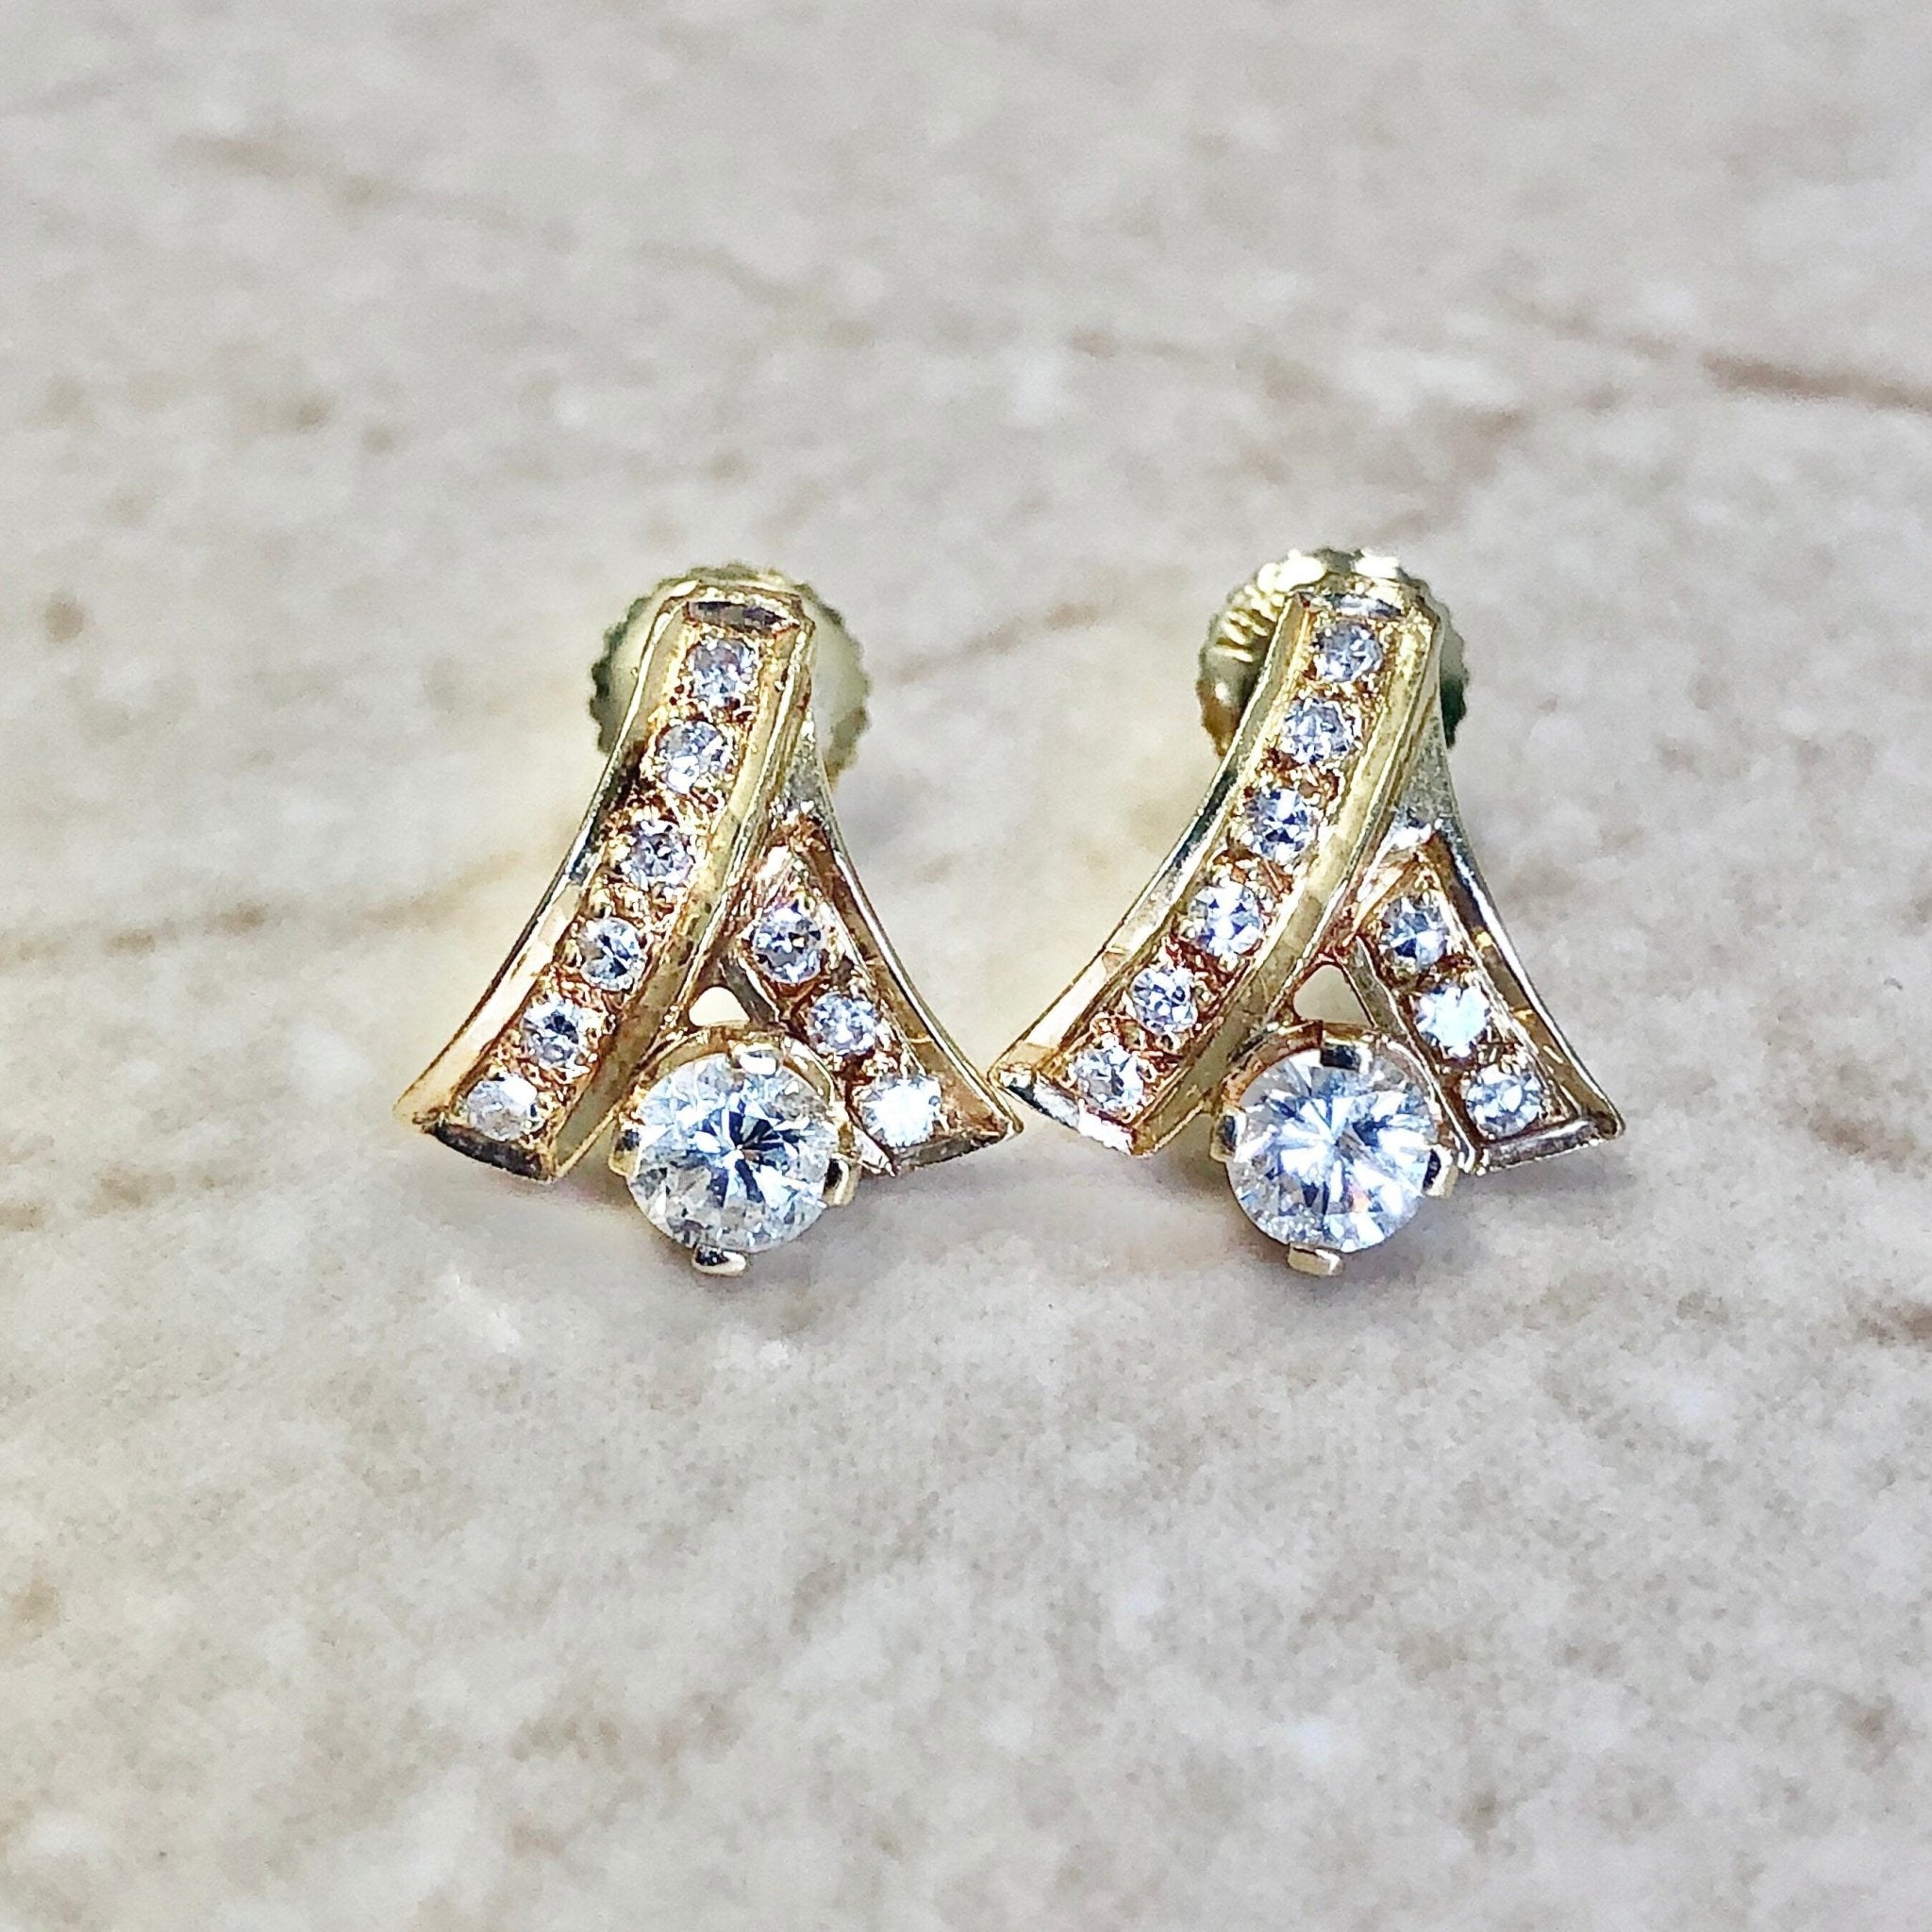 Buy 18KT Latest Gold Diamond Earrings - PC Chandra